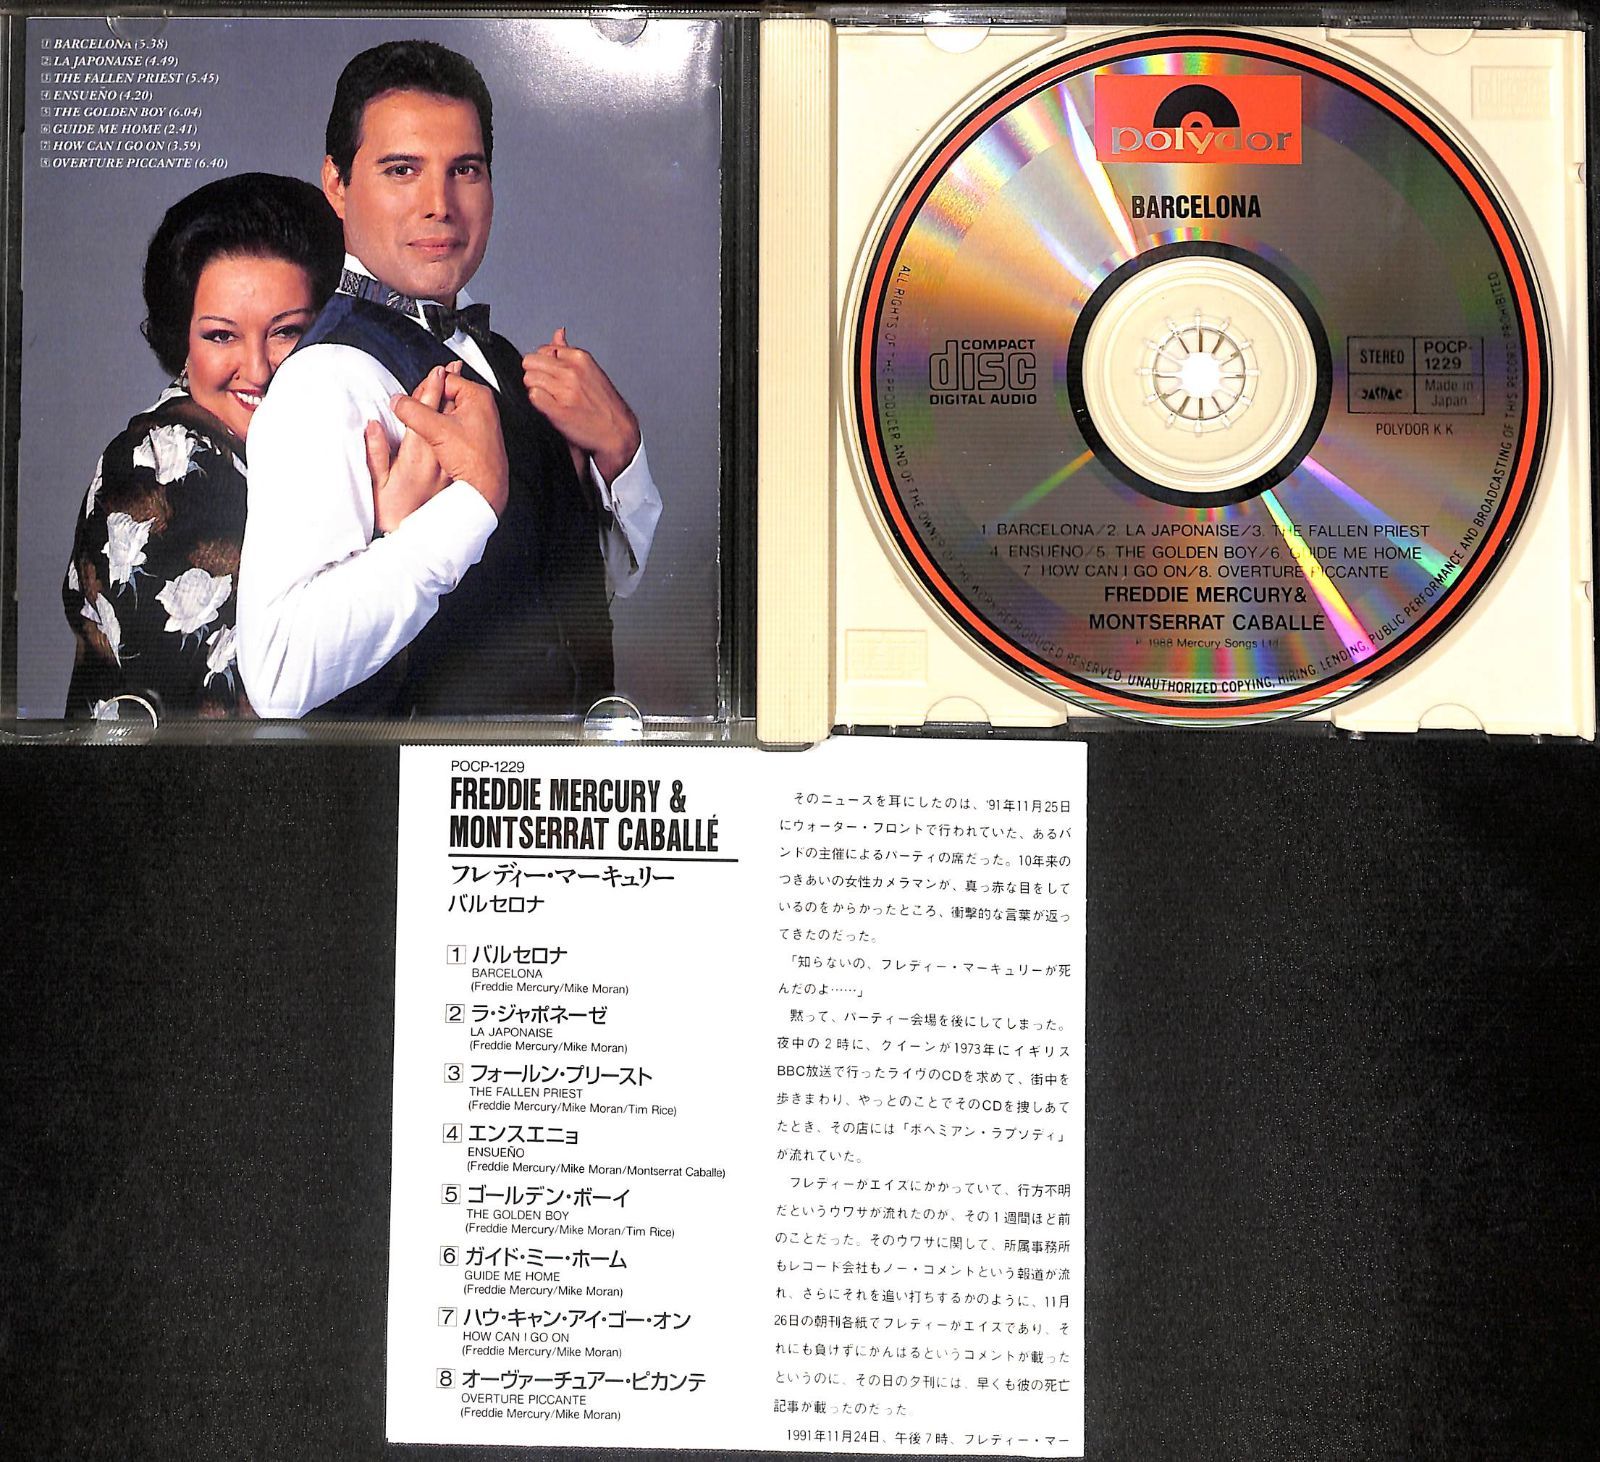 【CD】Freddie Mercury u0026 Montserrat Caballe Barcelona フレディ・マーキュリー モンセラート・カバリェ